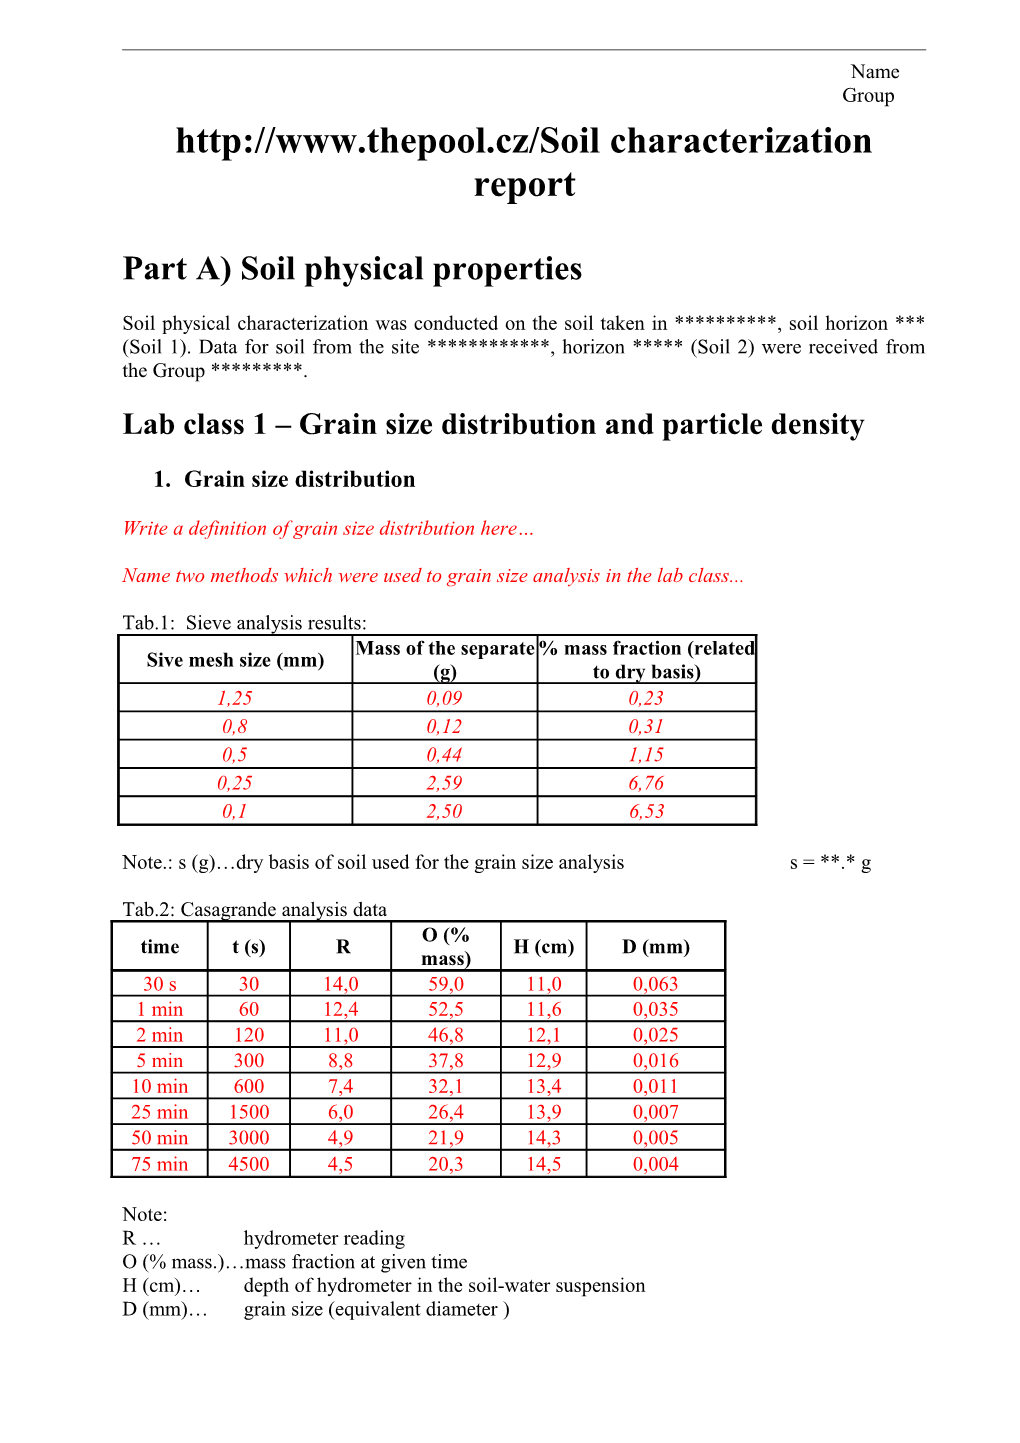 Part A) Soil Physical Properties